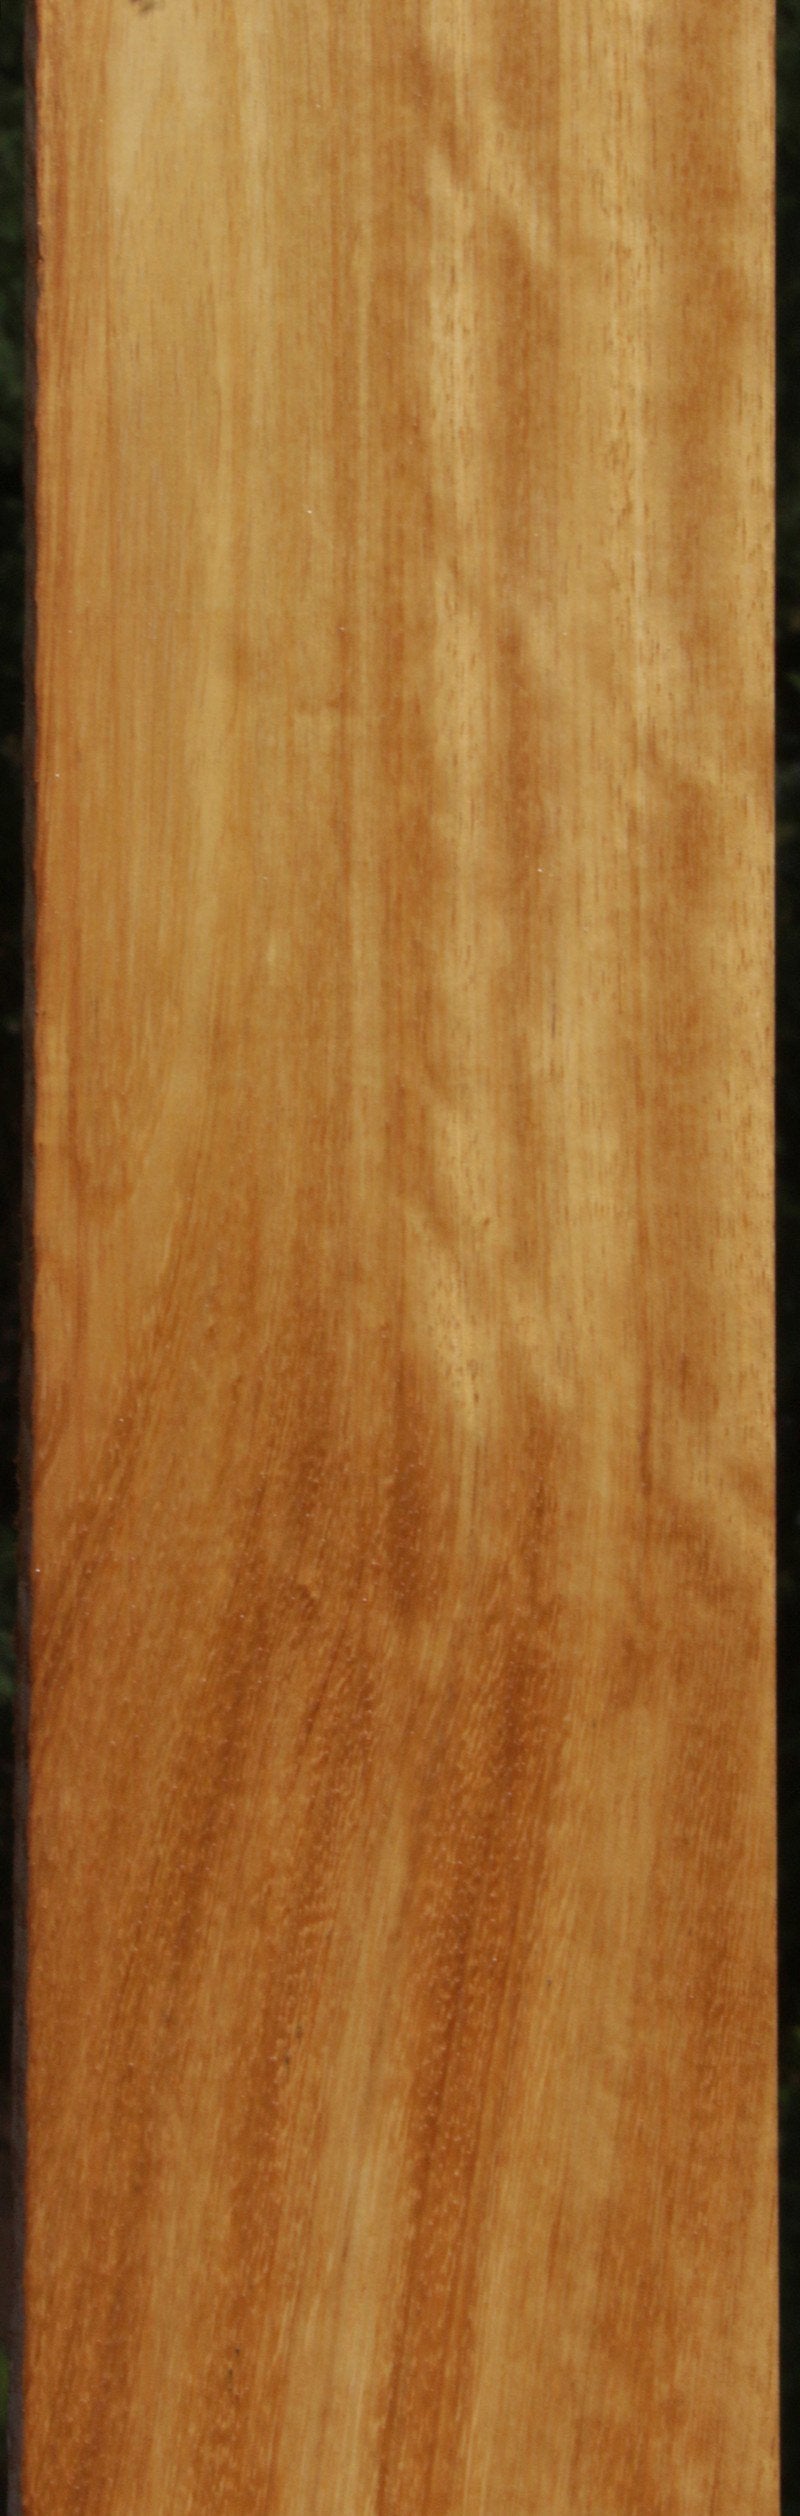 African Iroko Lumber